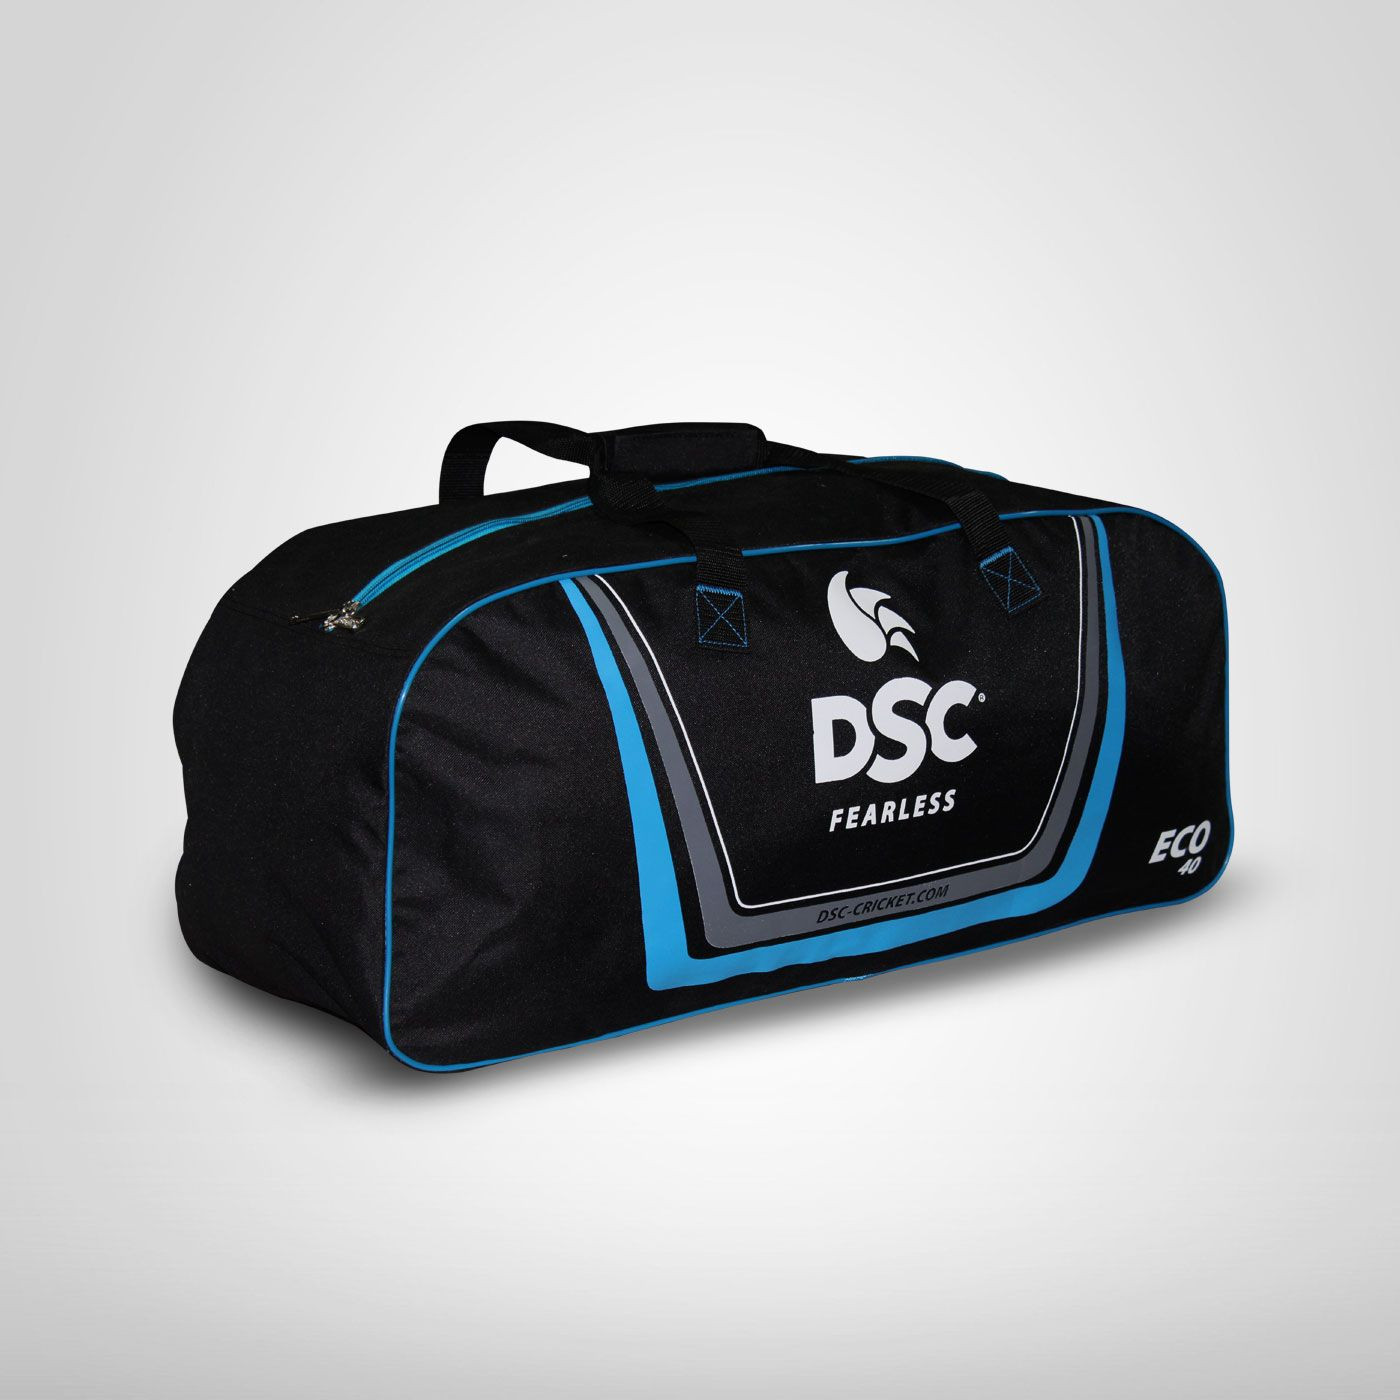 DSC Condor Flite Wheel Bag